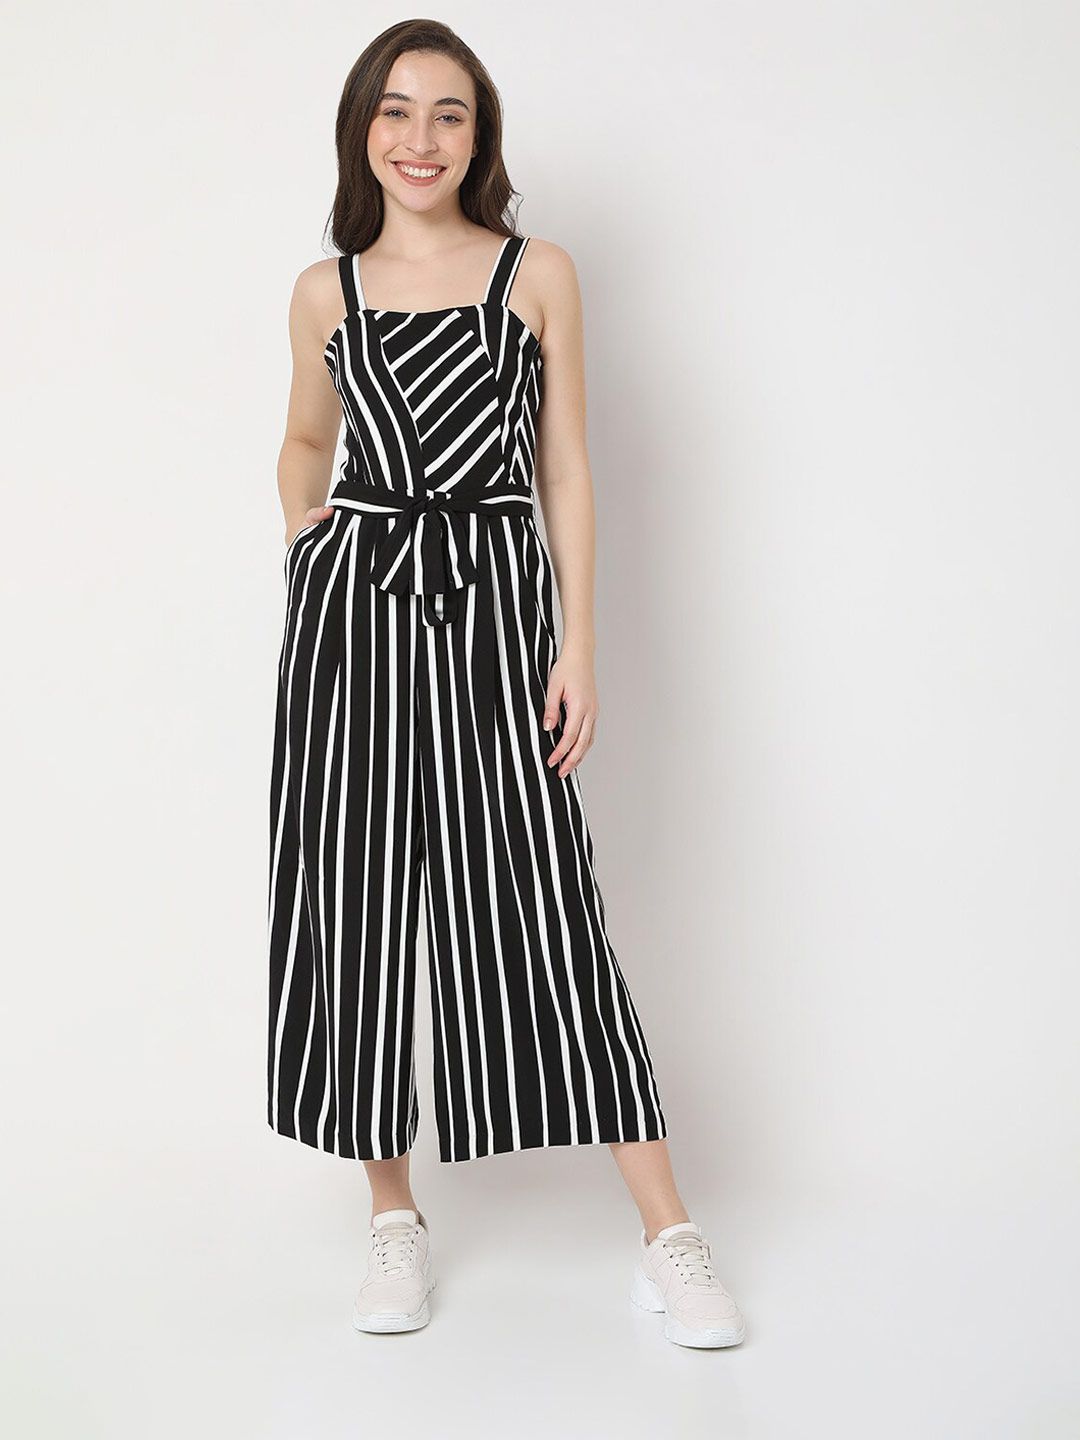 Vero Moda Black & White Striped Basic Jumpsuit Price in India